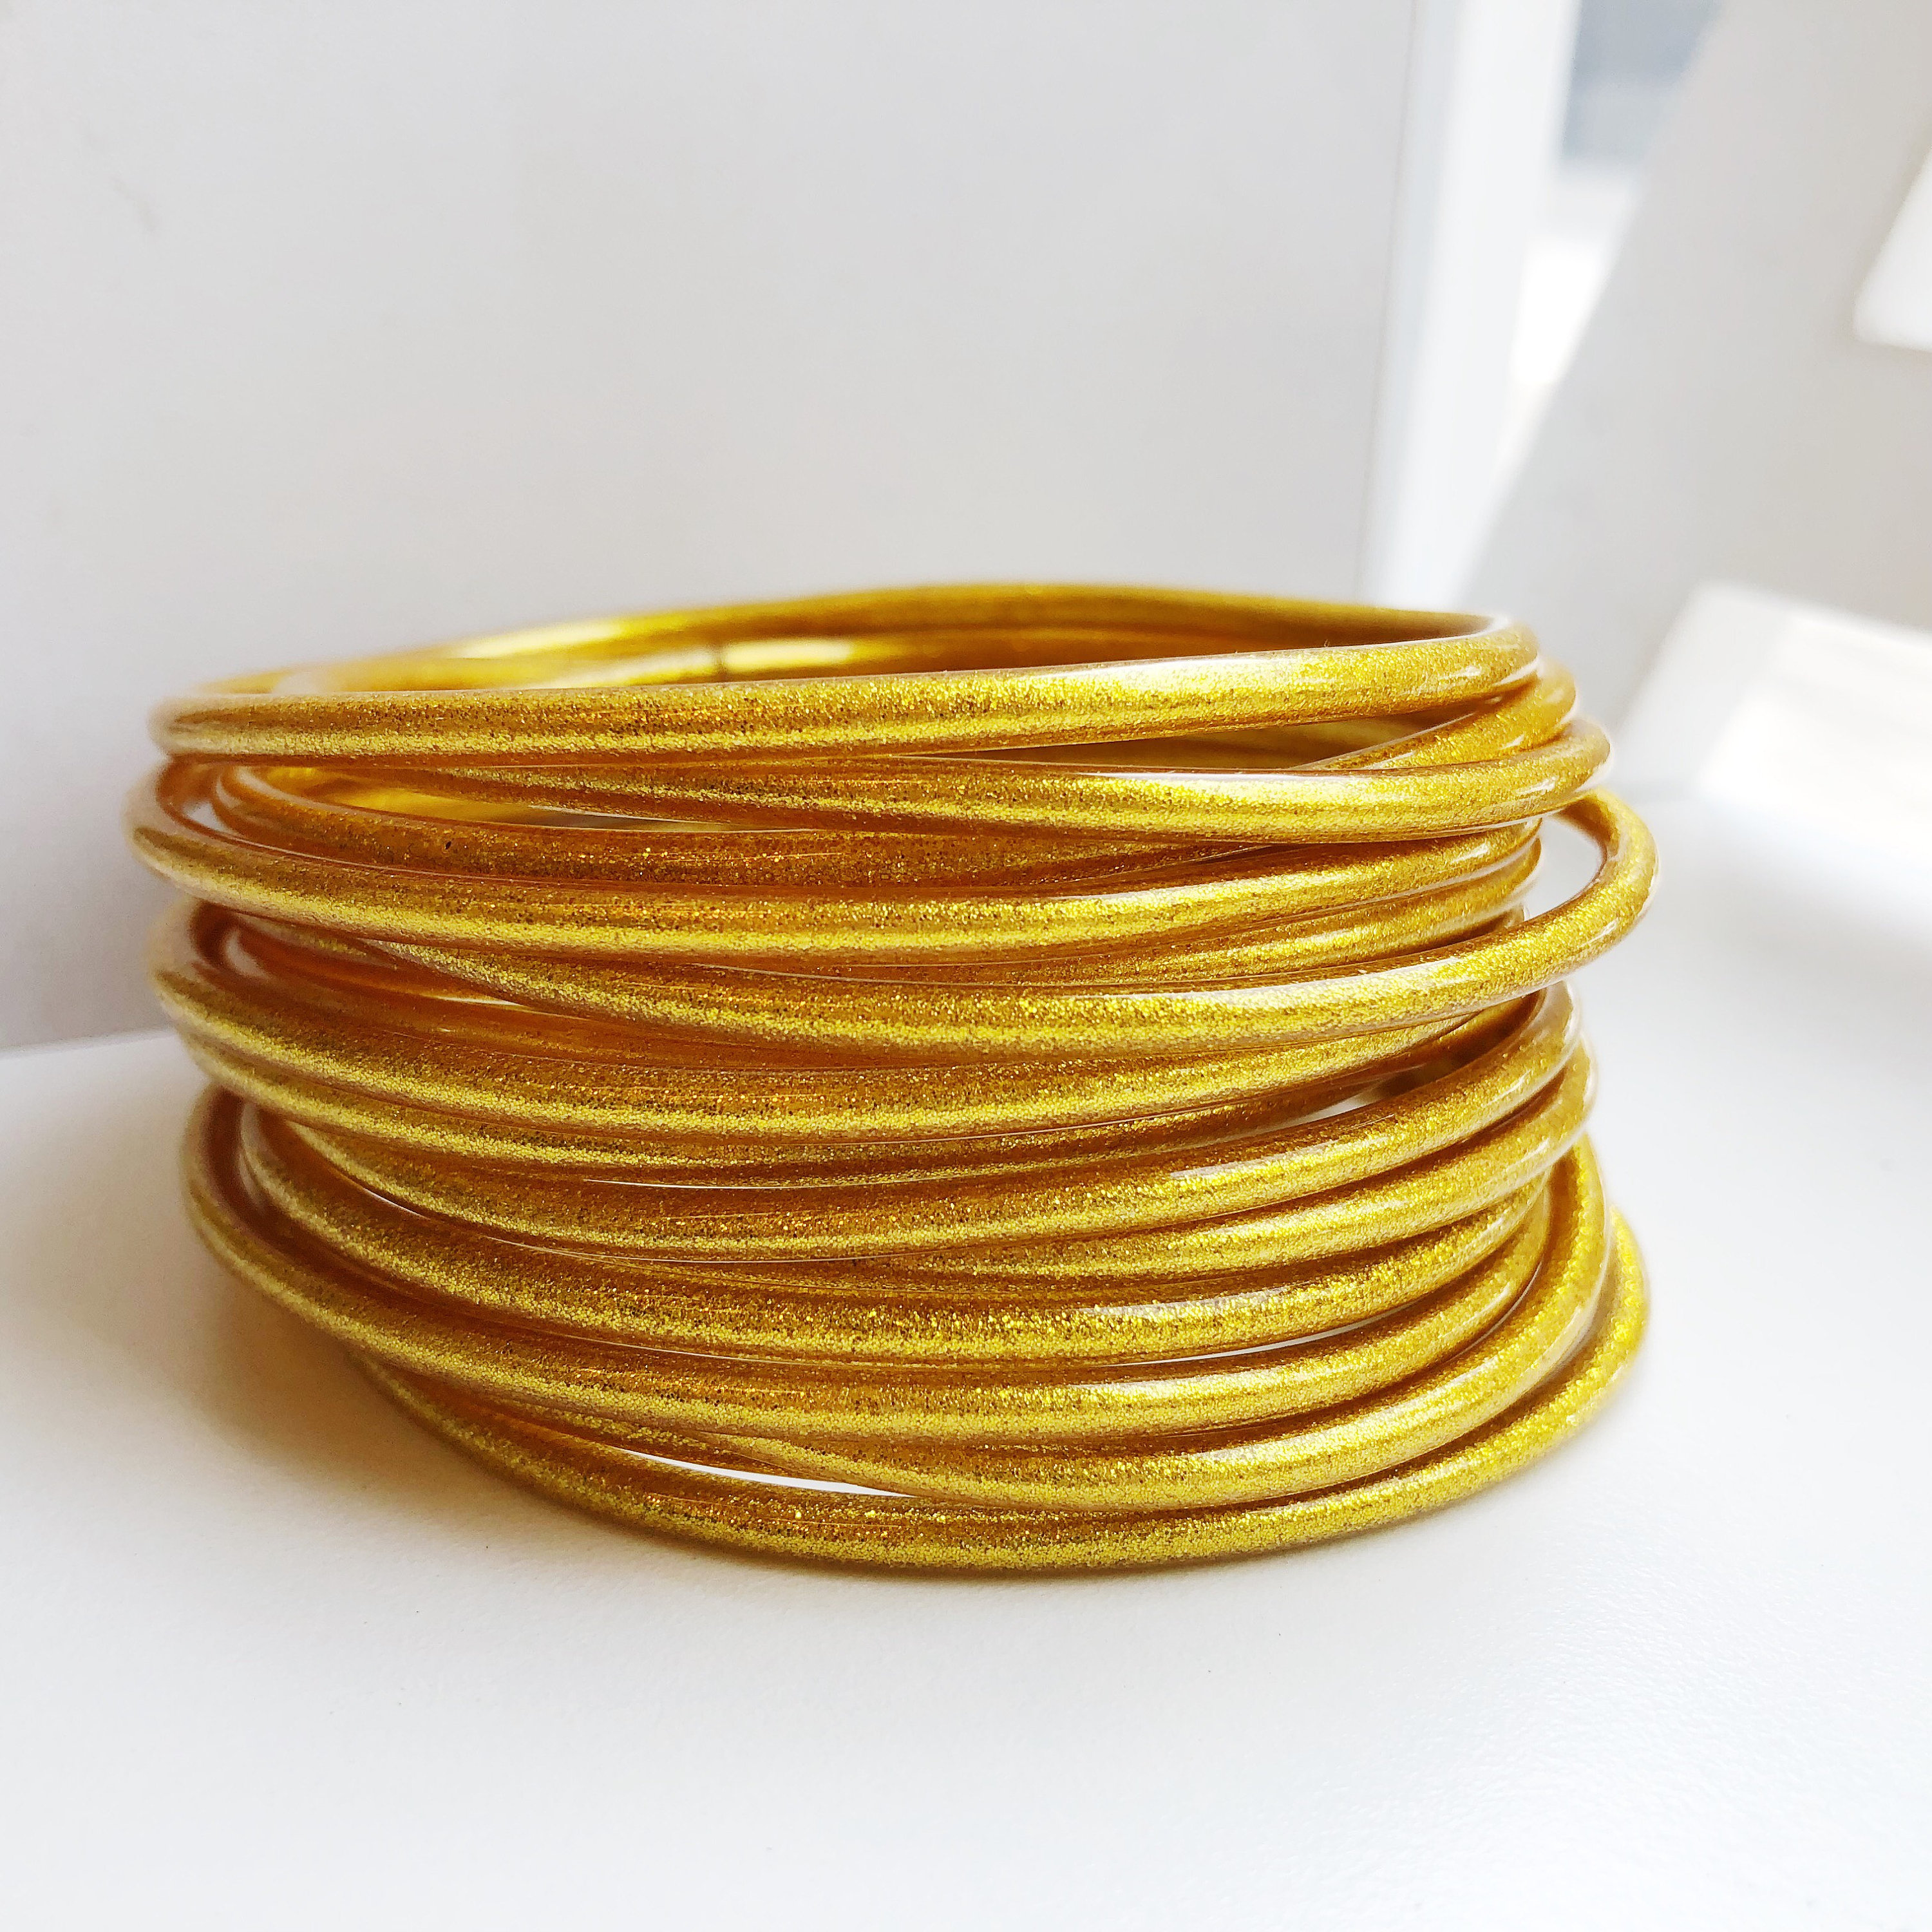 Shiny Gold Buddhist Bracelet, 3mm